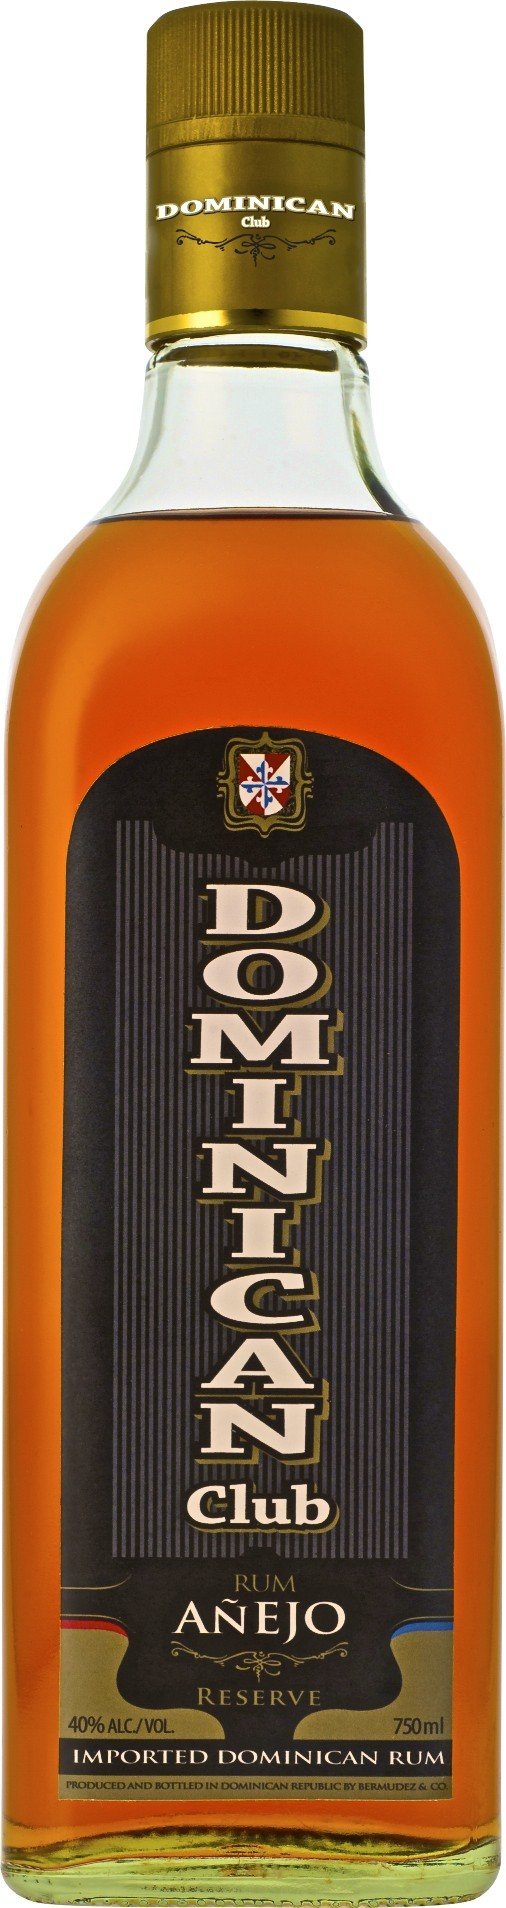 Dominican Club Rum Anejo 1.75L-0